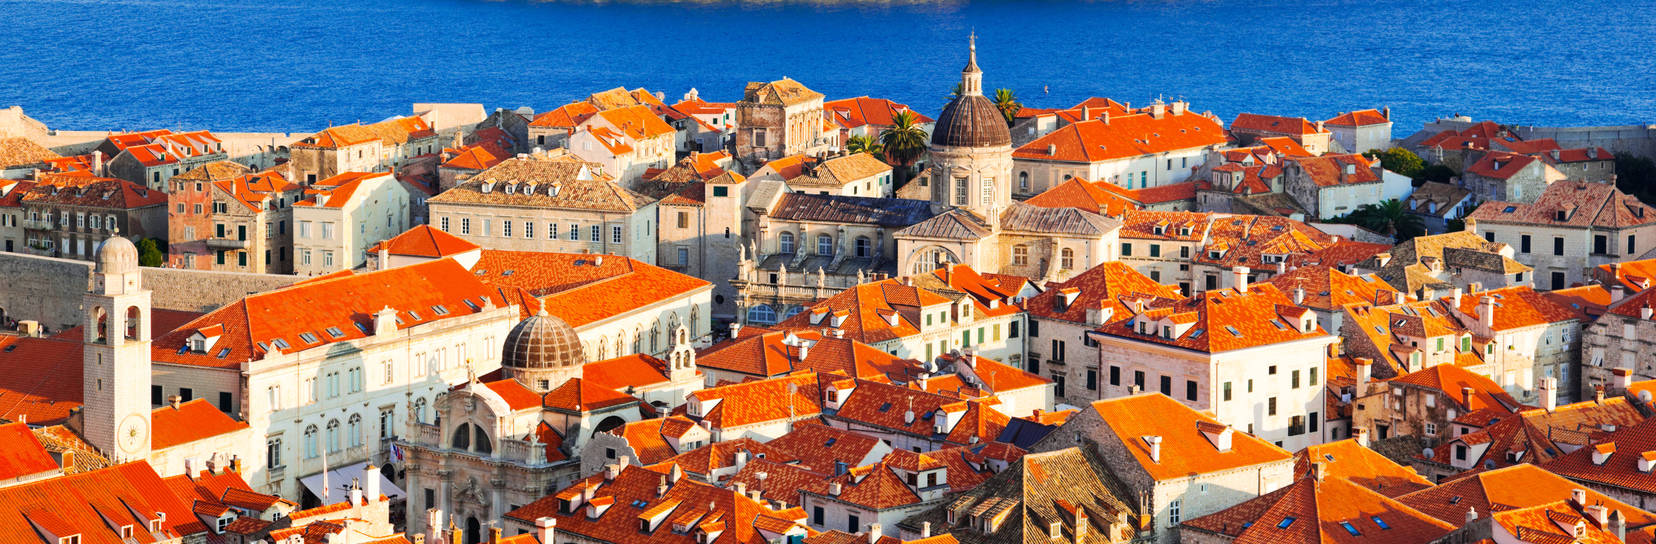 Dubrovnik-Fotolia_16639355_M.jpg